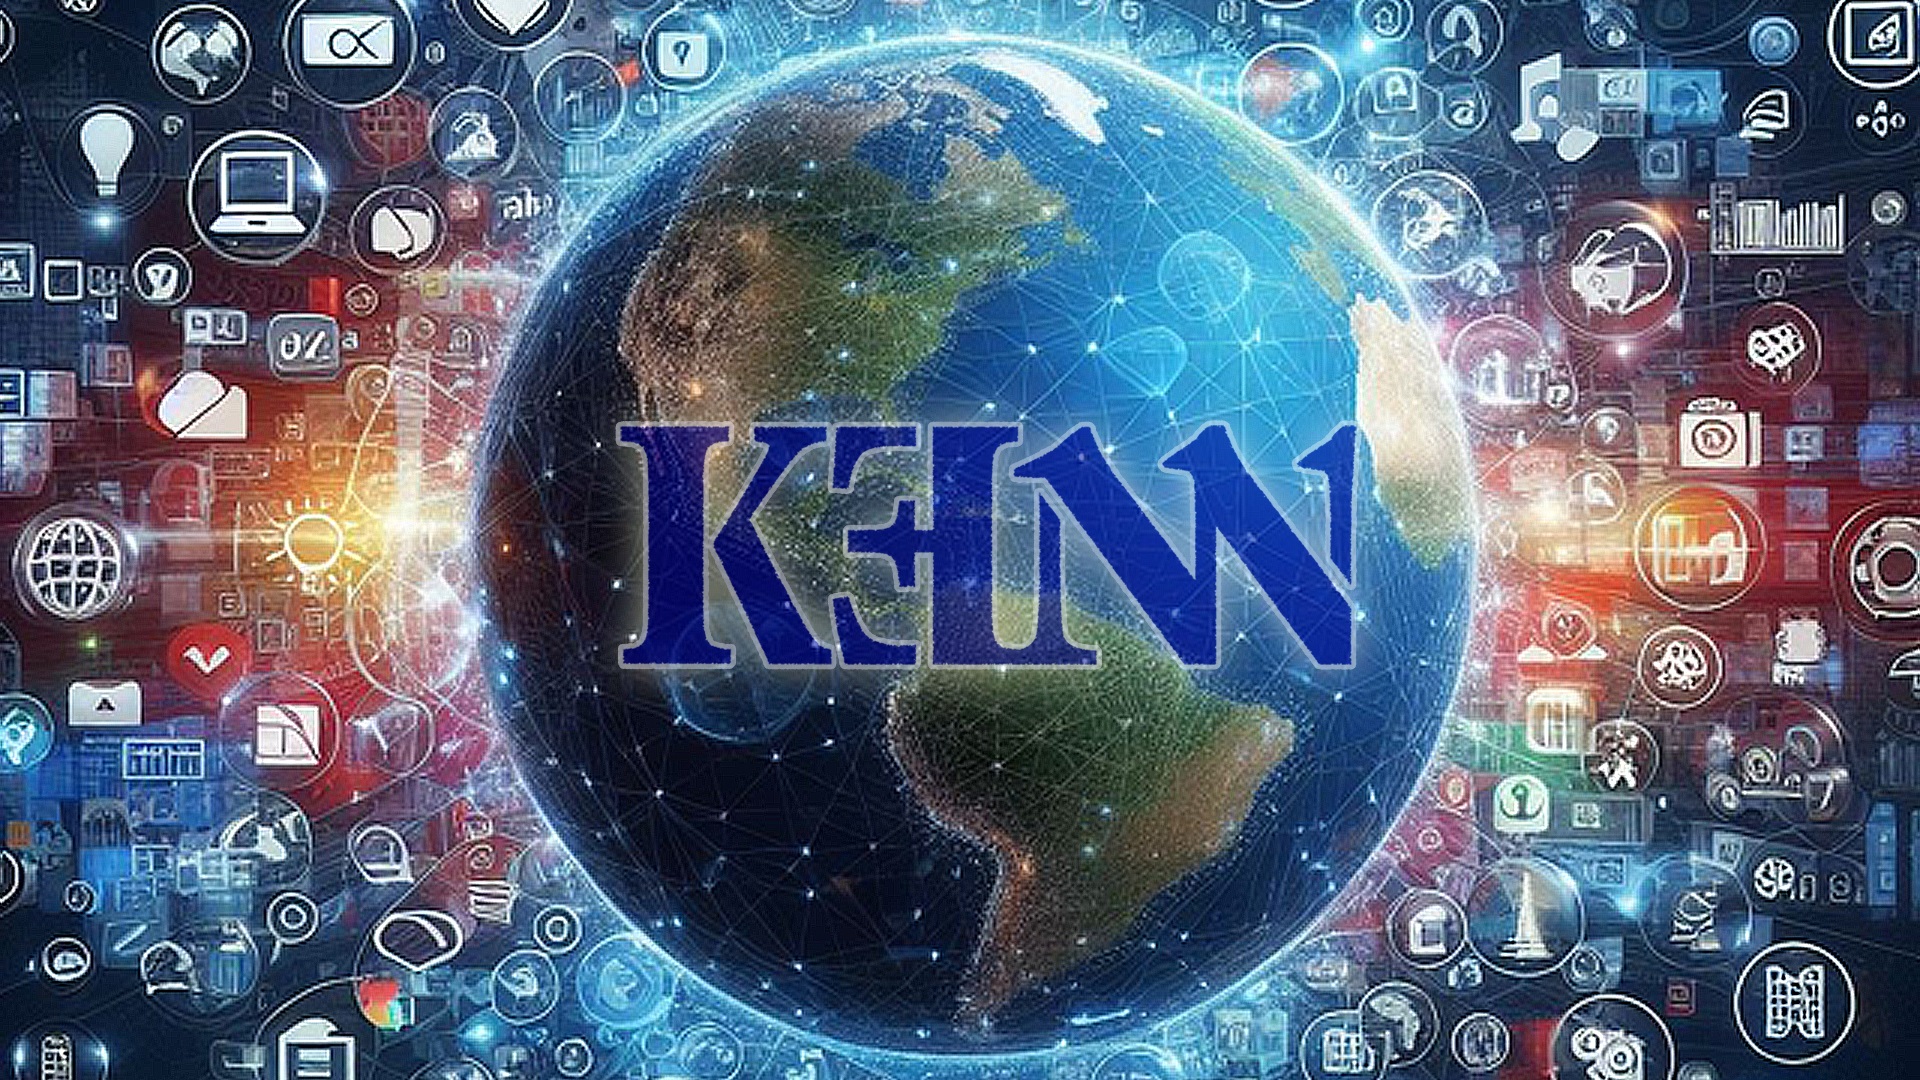 KENN's World